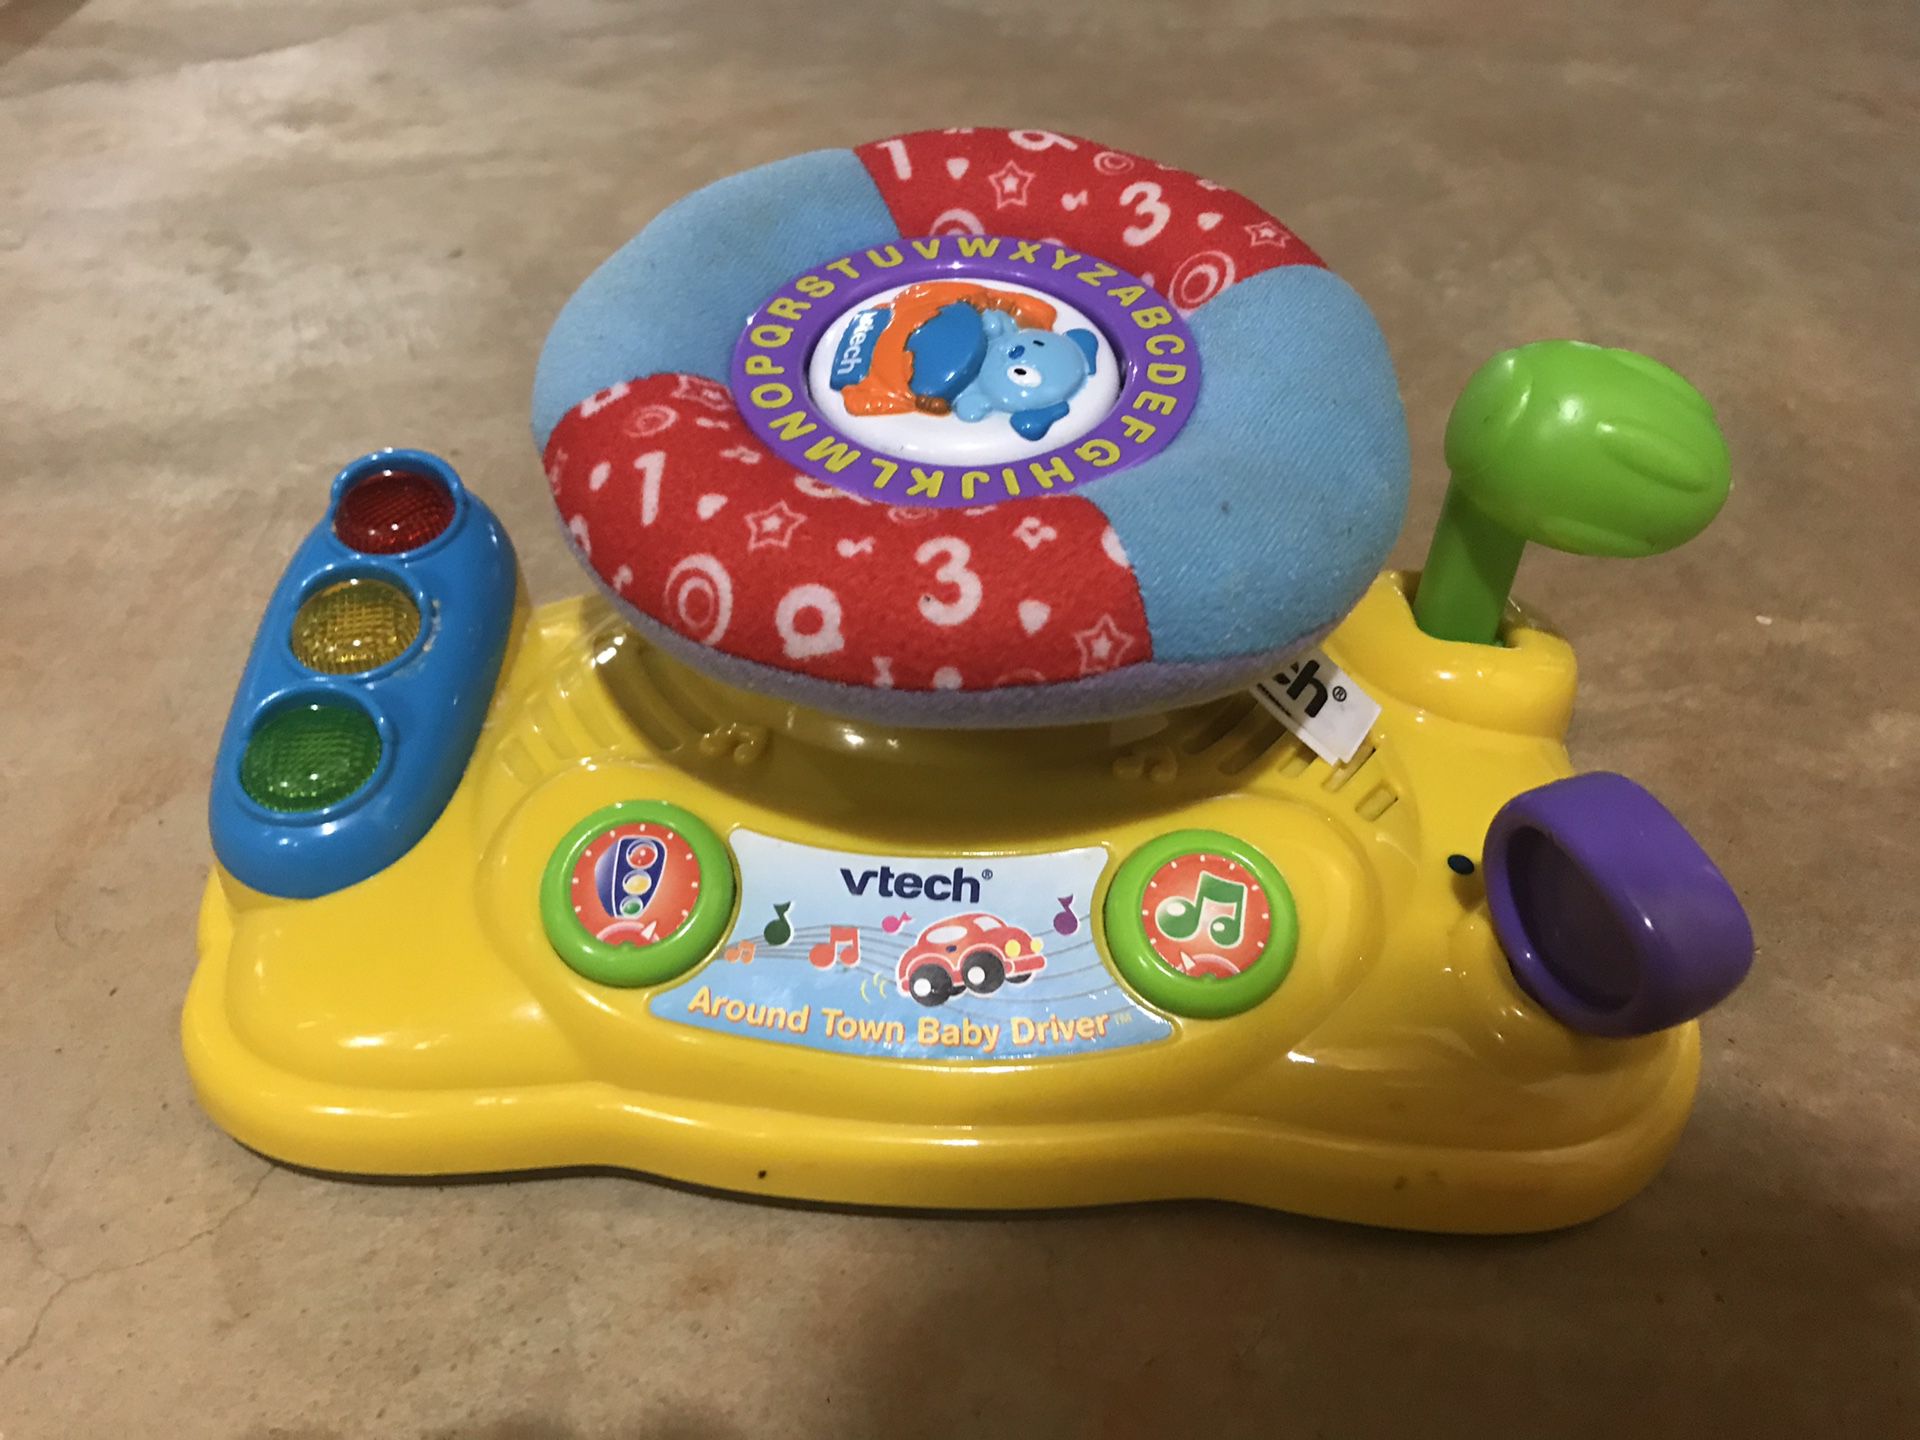 Vtech steering wheel toy